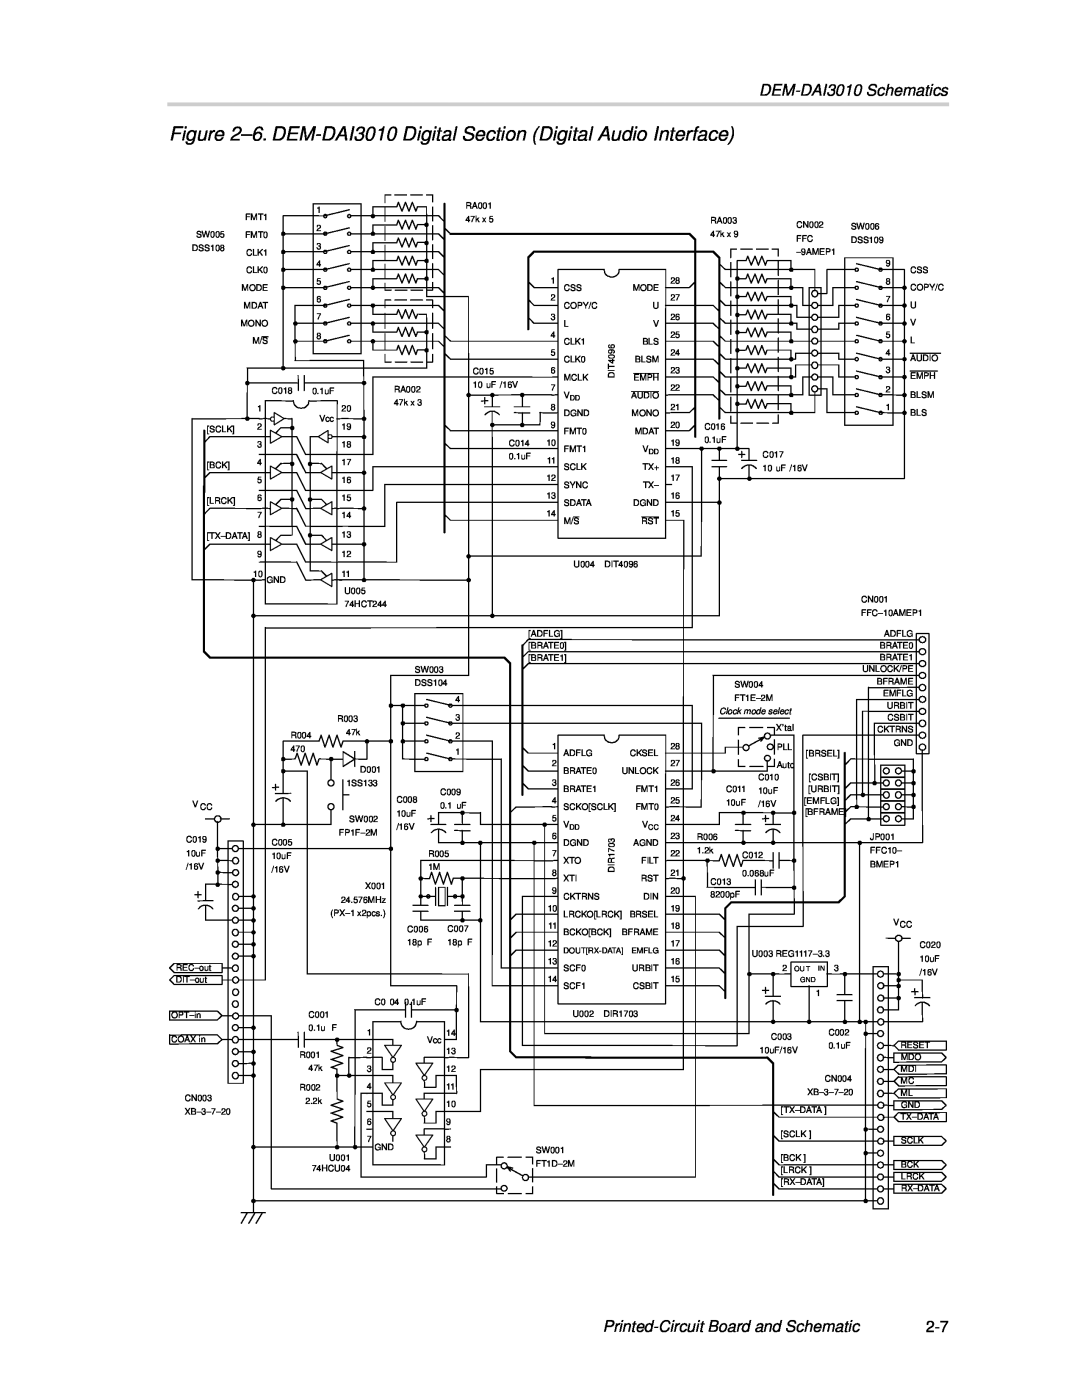 Texas Instruments manual DEM-DAI3010Schematics, Printed-CircuitBoard and Schematic 